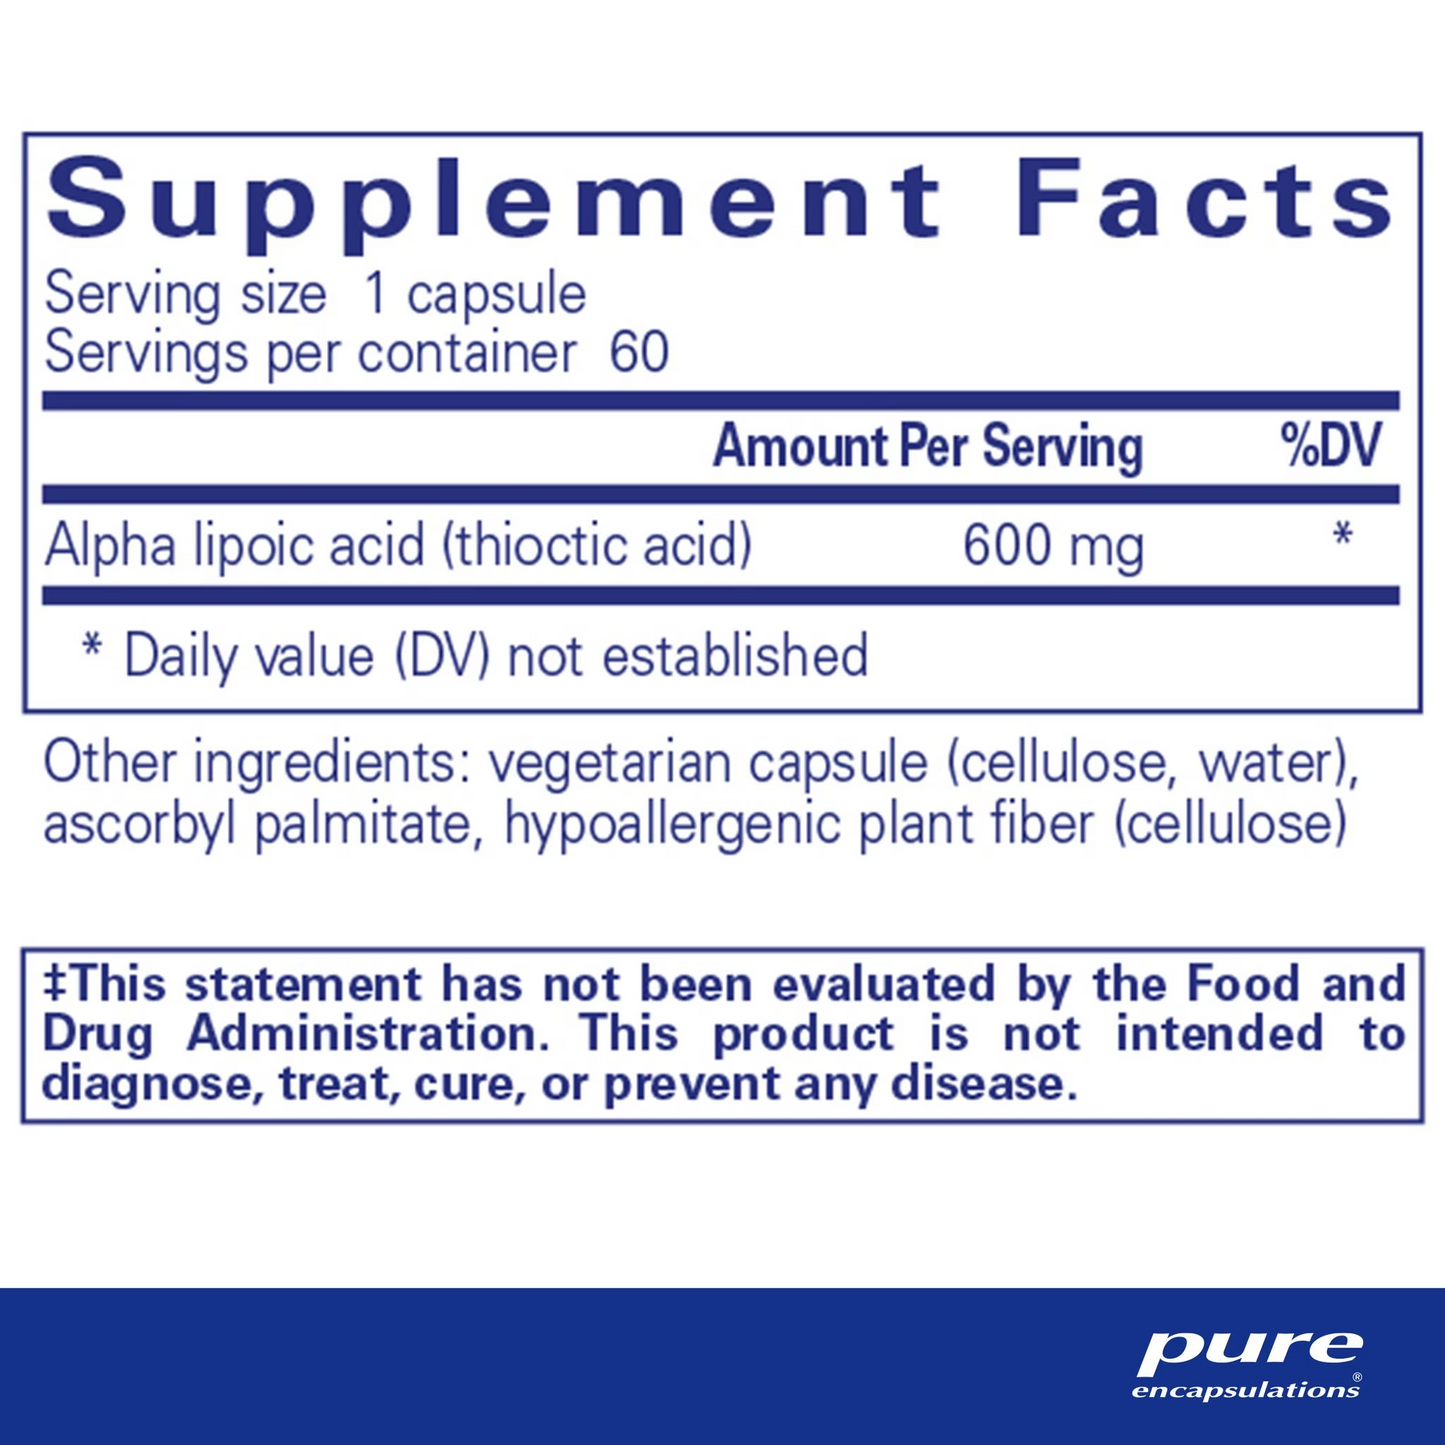 Pure Encapsulations - Alpha Lipoic Acid 600 mg. 60's